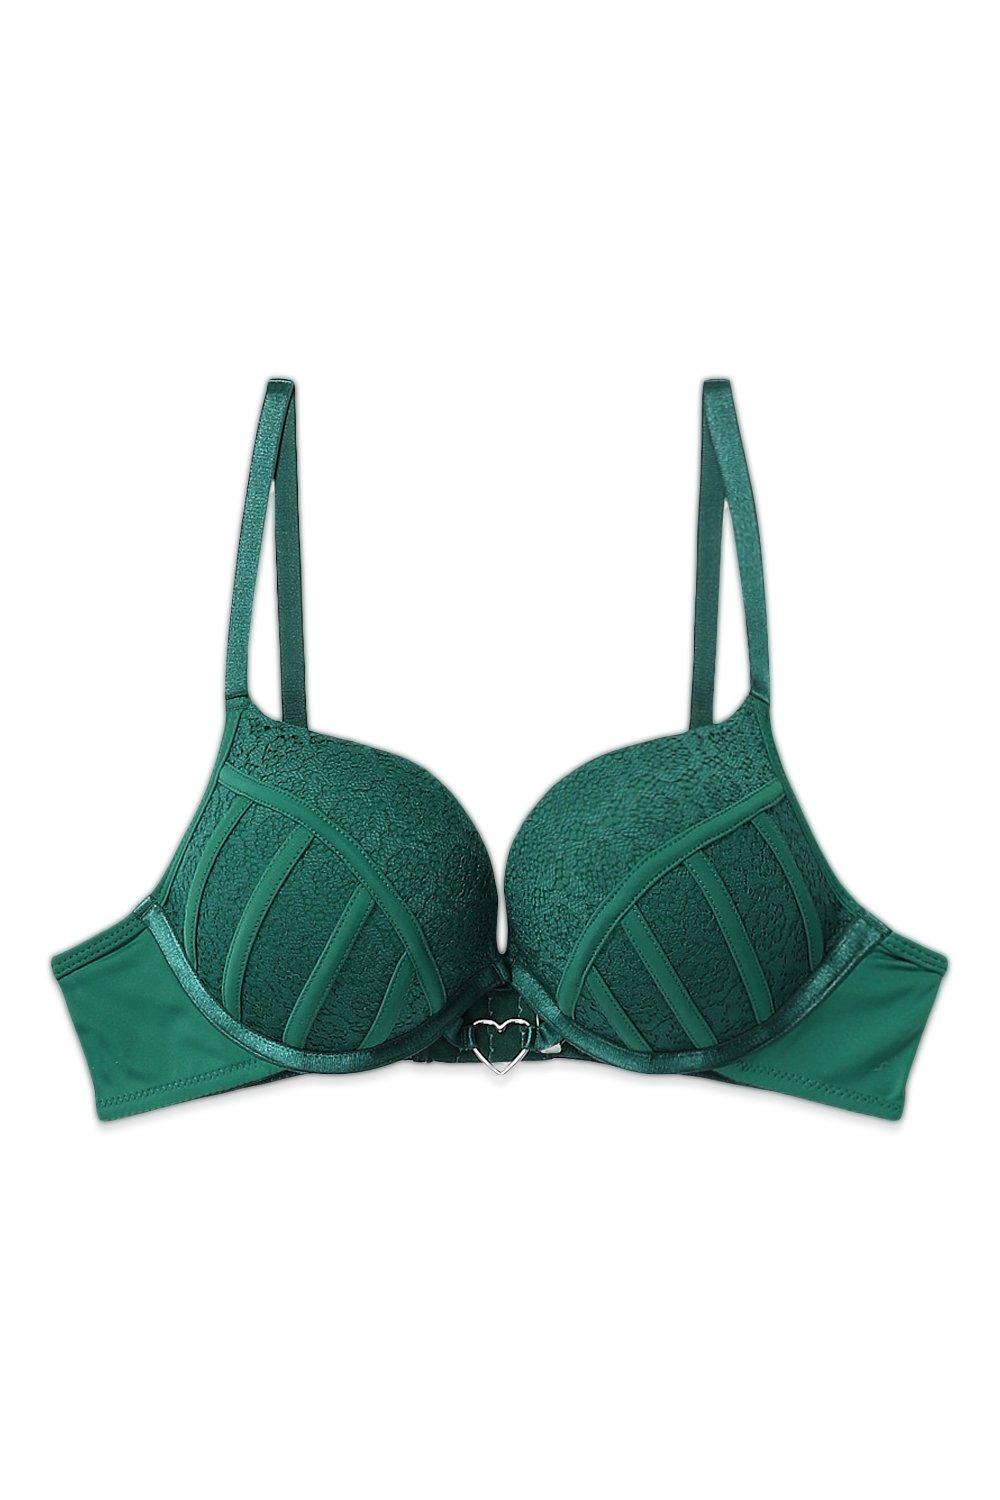 https://media.boohoo.com/i/boohoo/lzz00973_emerald_xl_4/female-emerald-heart-detail-lace-super-push-up-bra